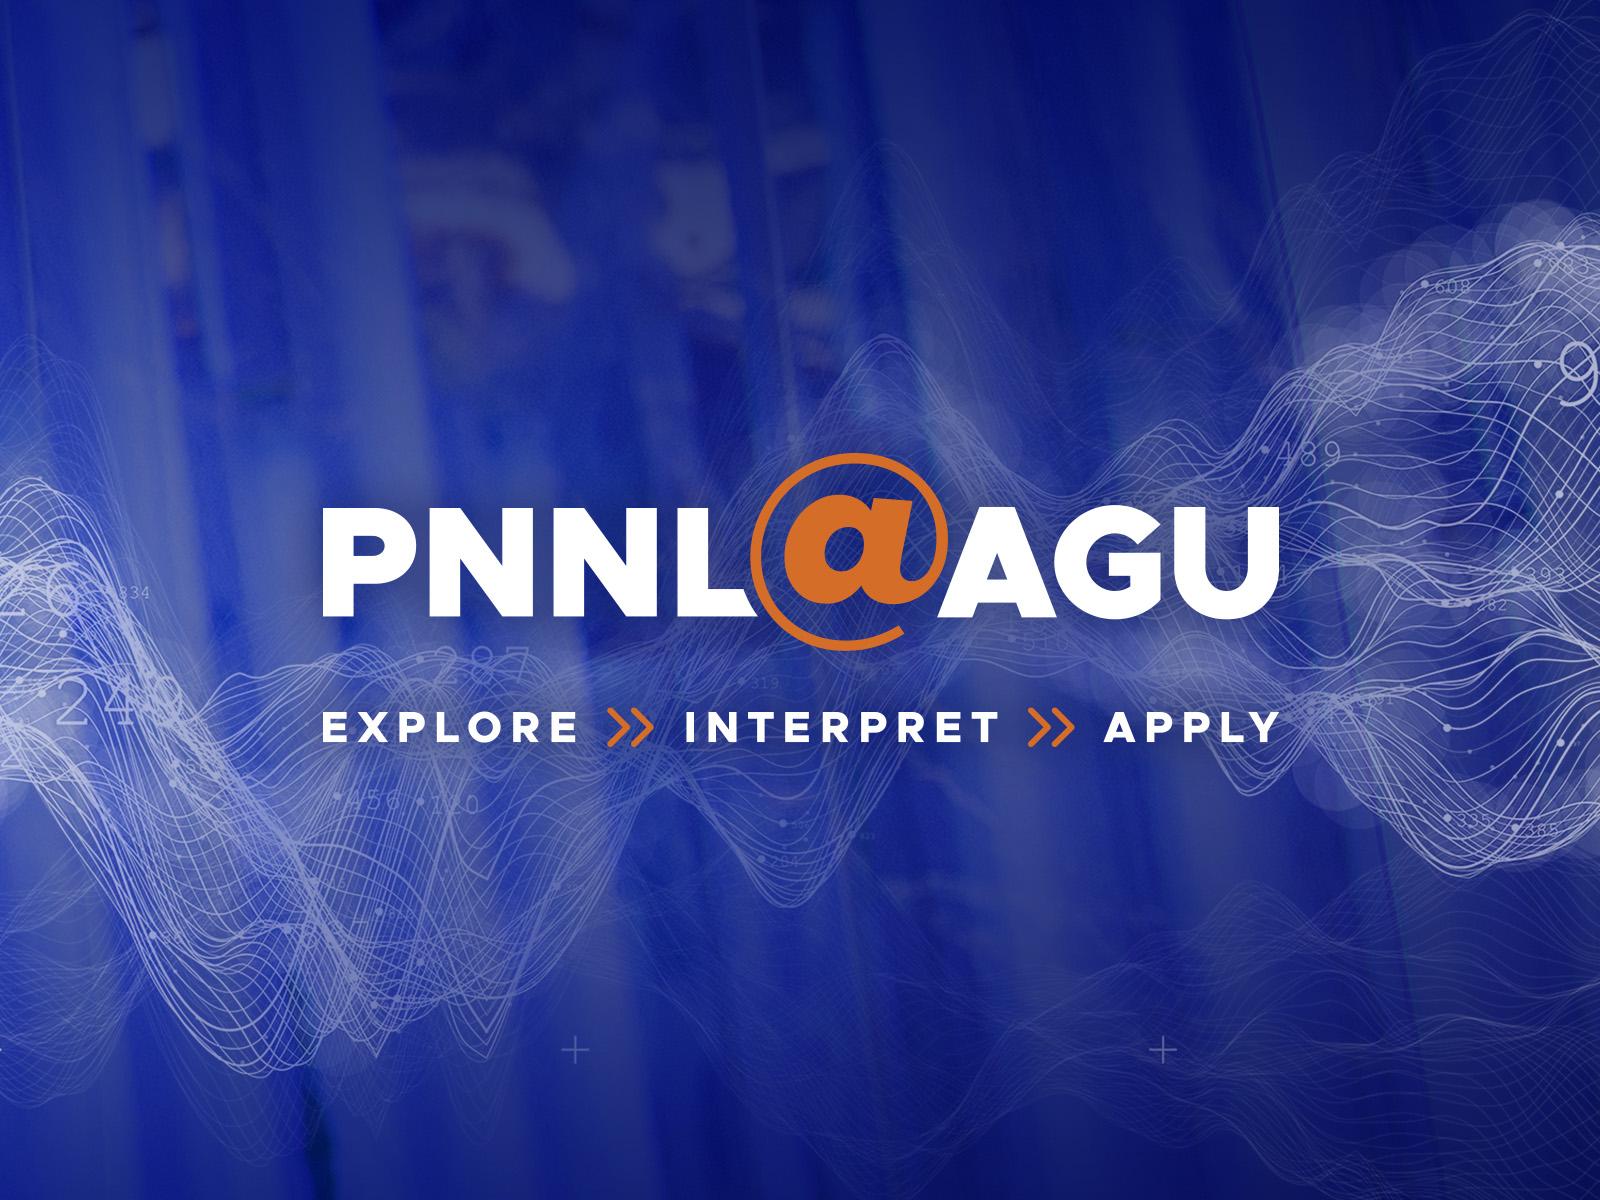 Blue background with PNNL@AGU lettering